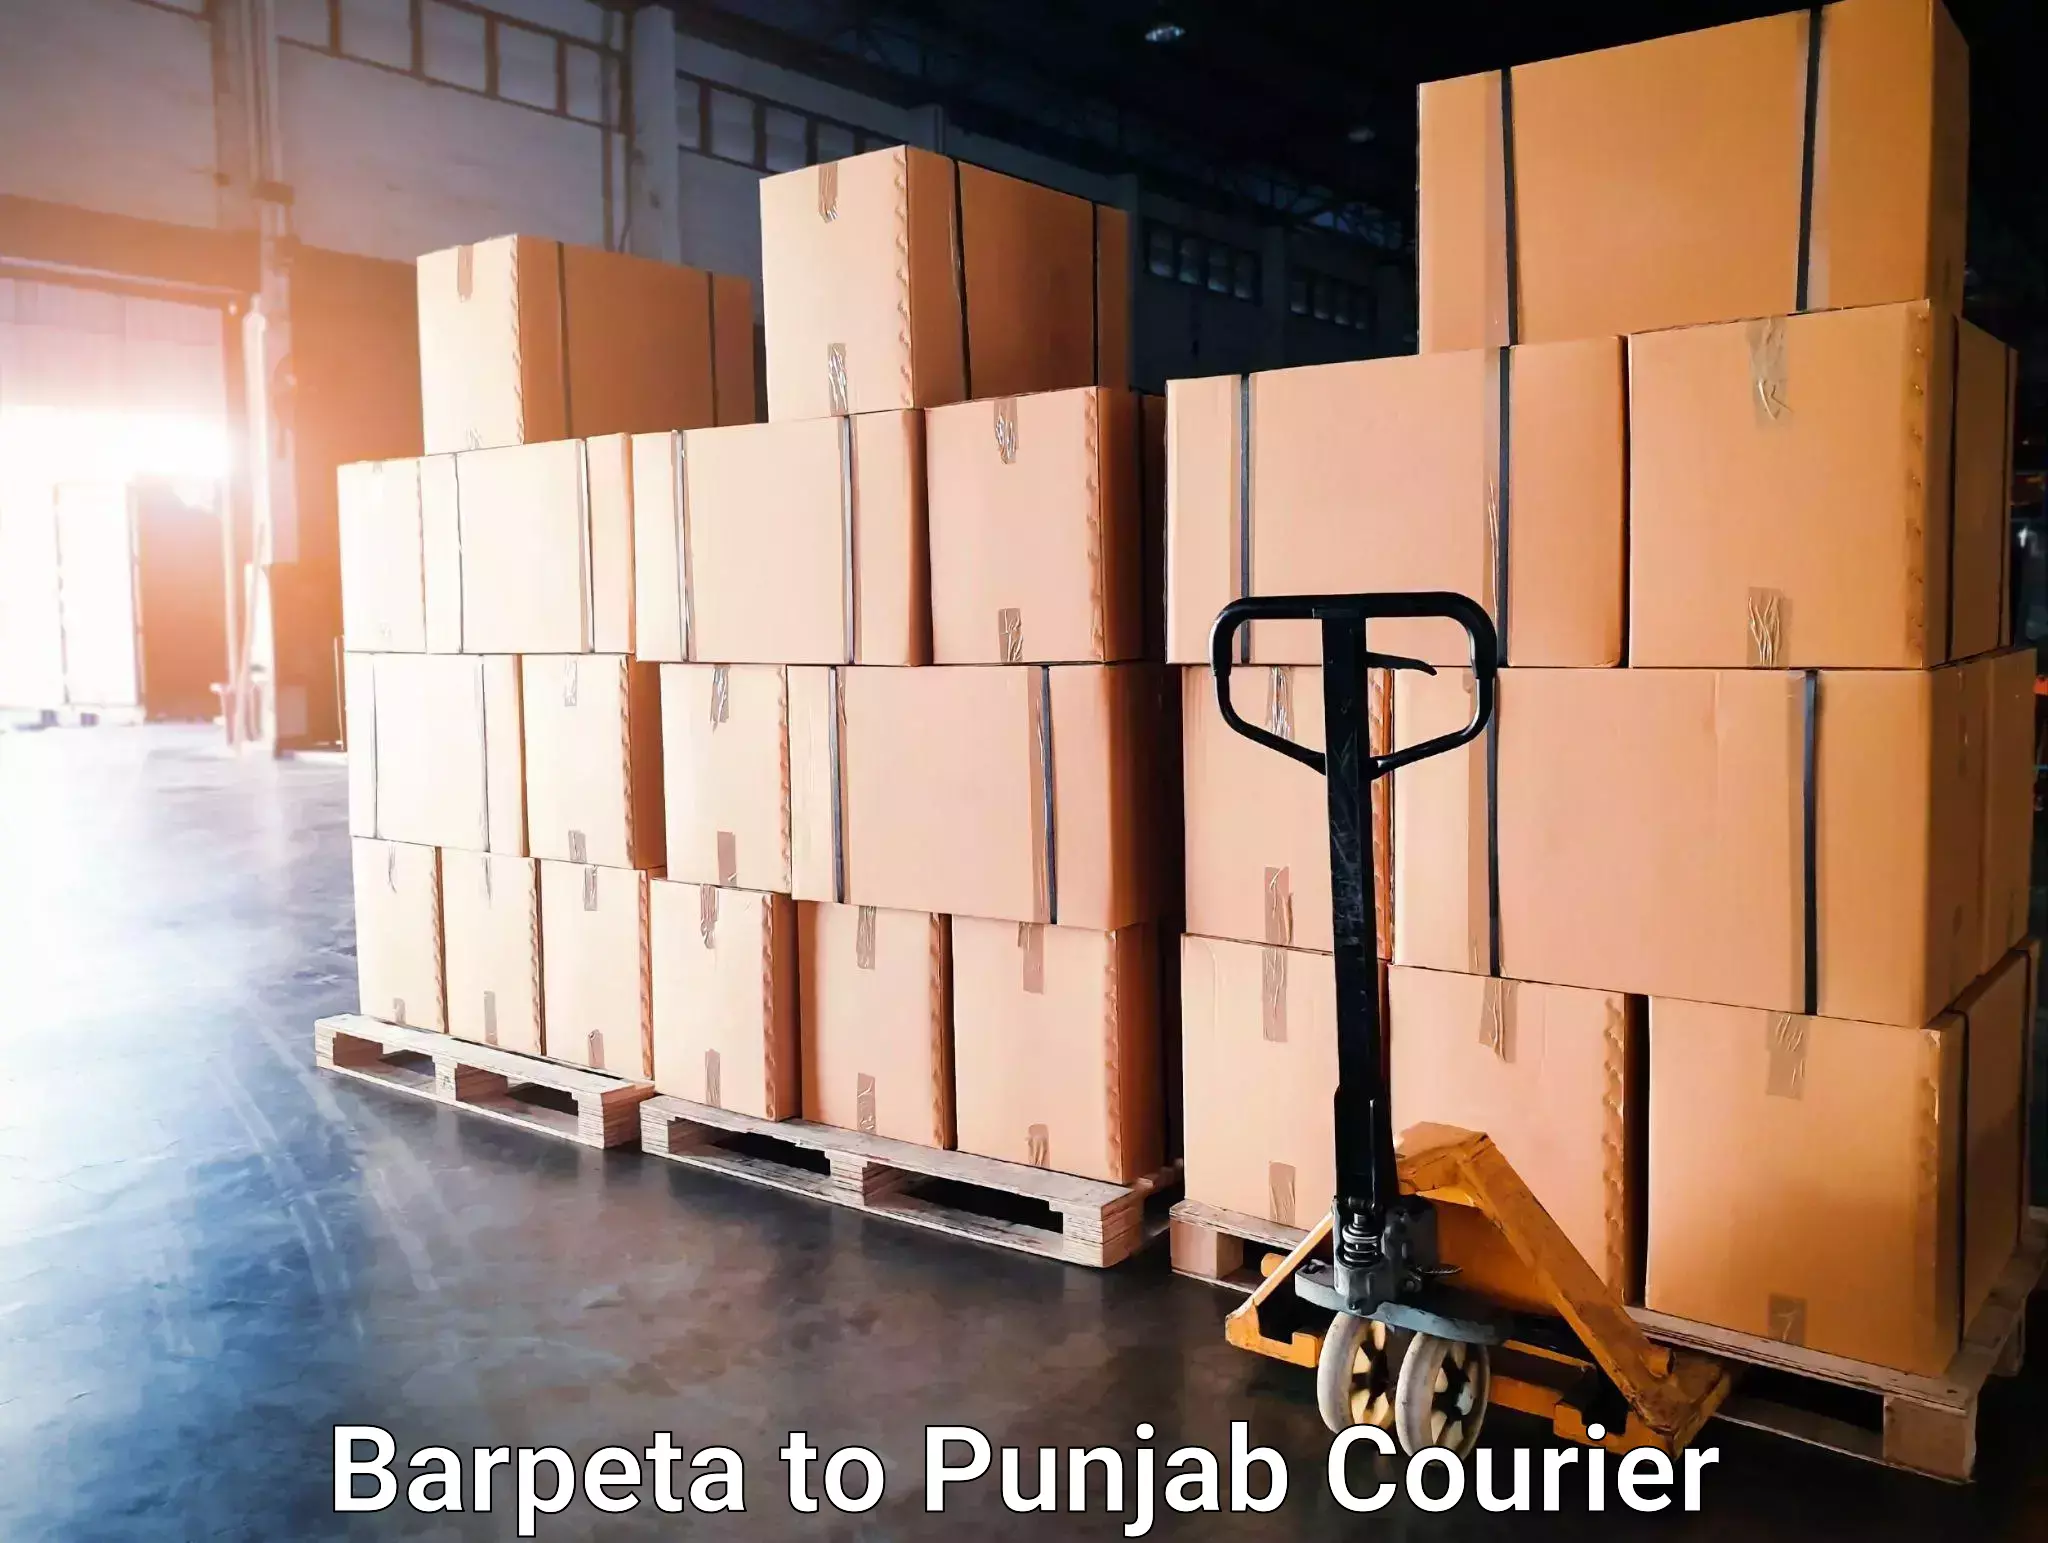 Reliable delivery network Barpeta to Faridkot